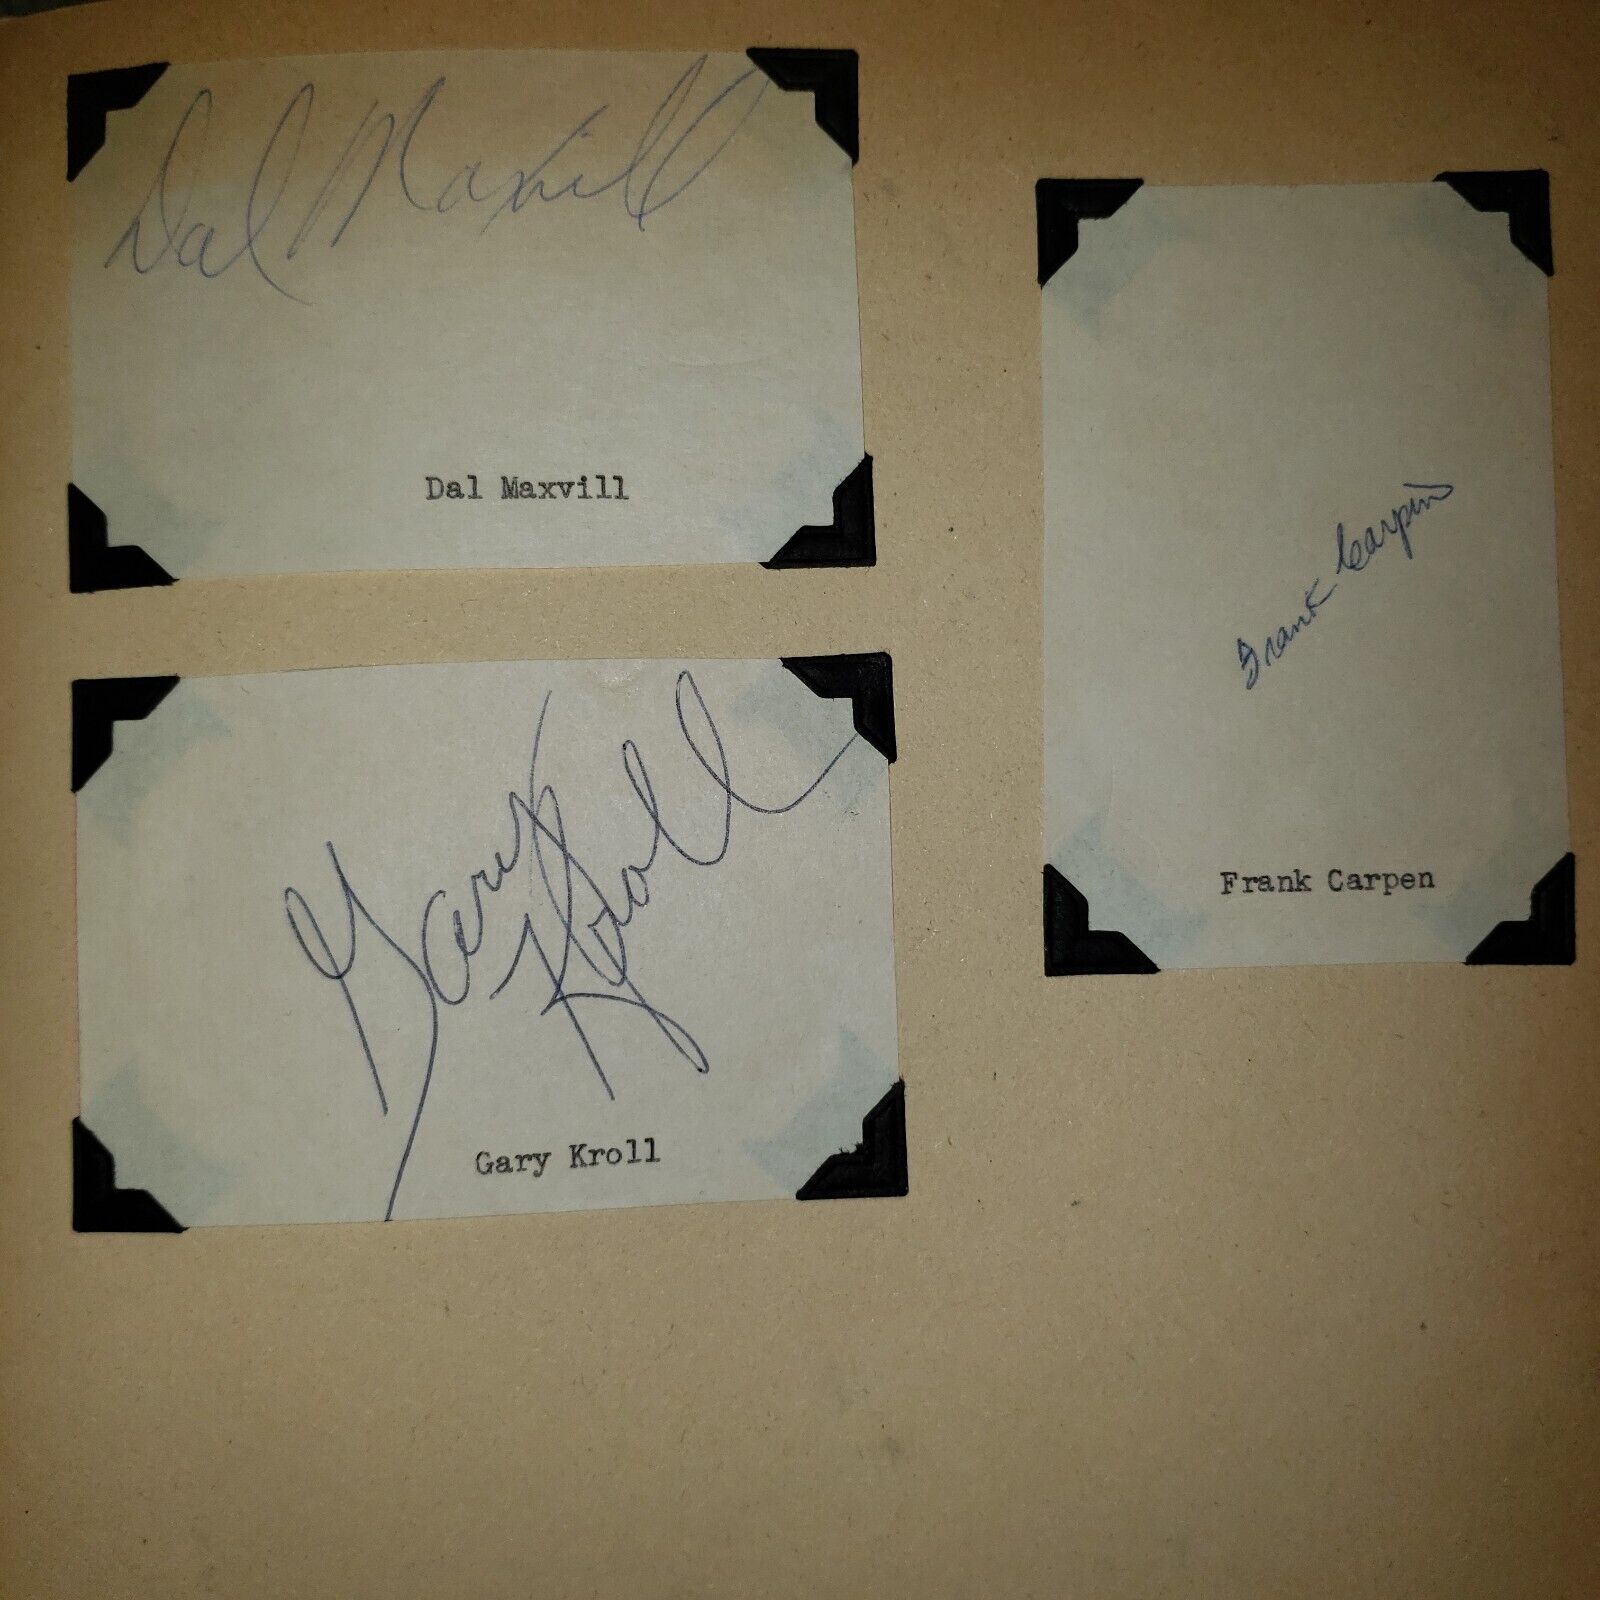 Vintage Autographs; Dal Maxvill - Frank Carpin - Gary Kroll